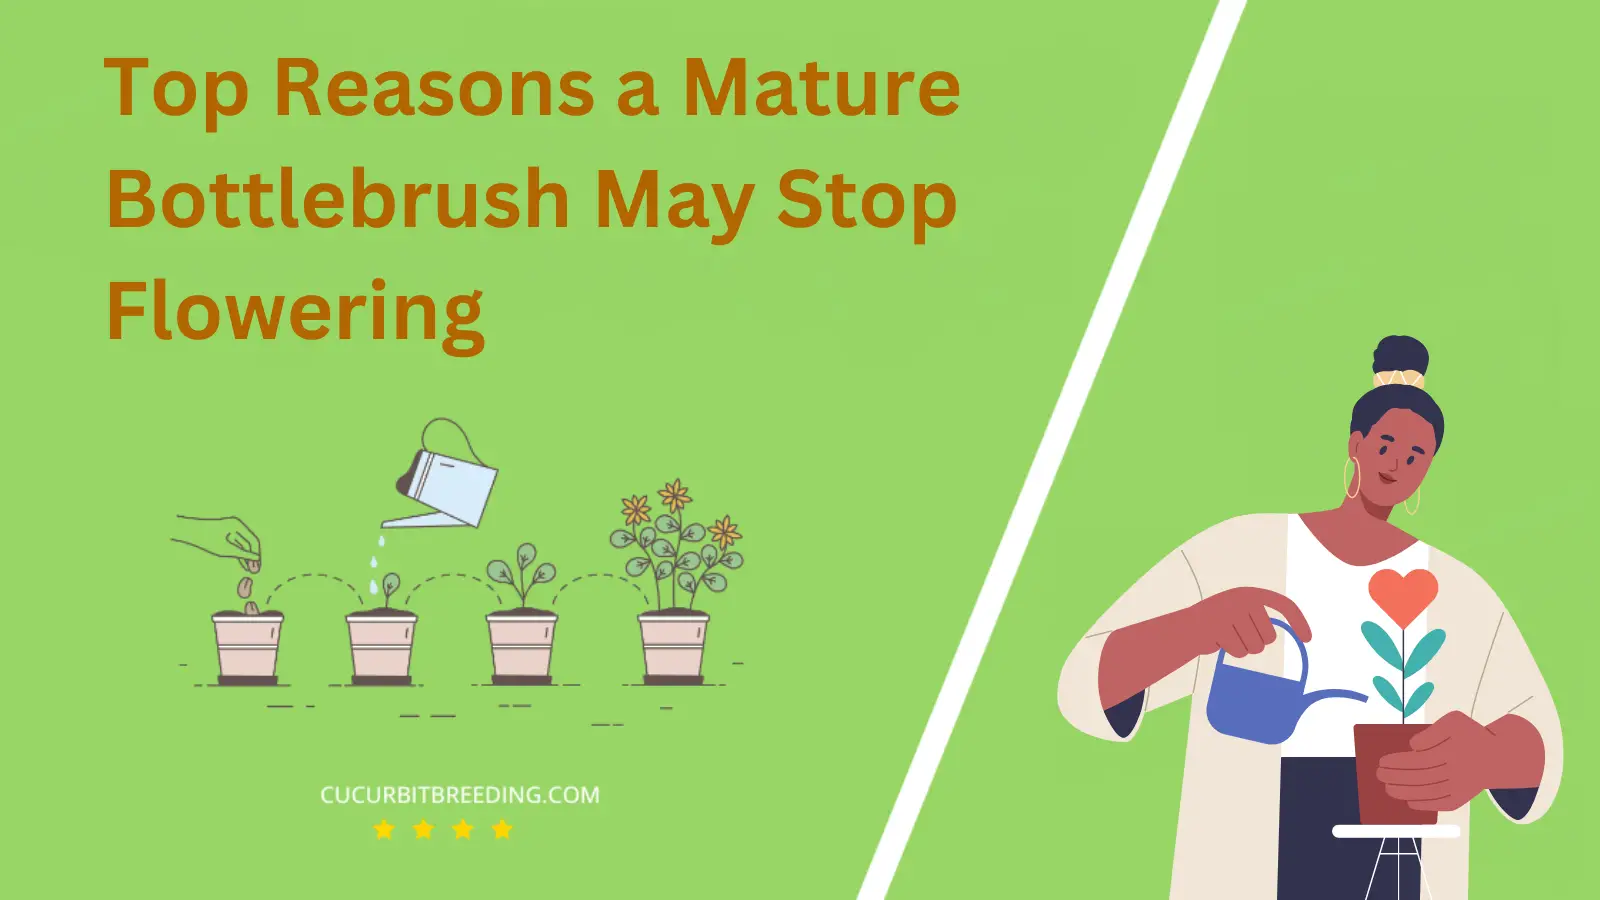 Top Reasons a Mature Bottlebrush May Stop Flowering